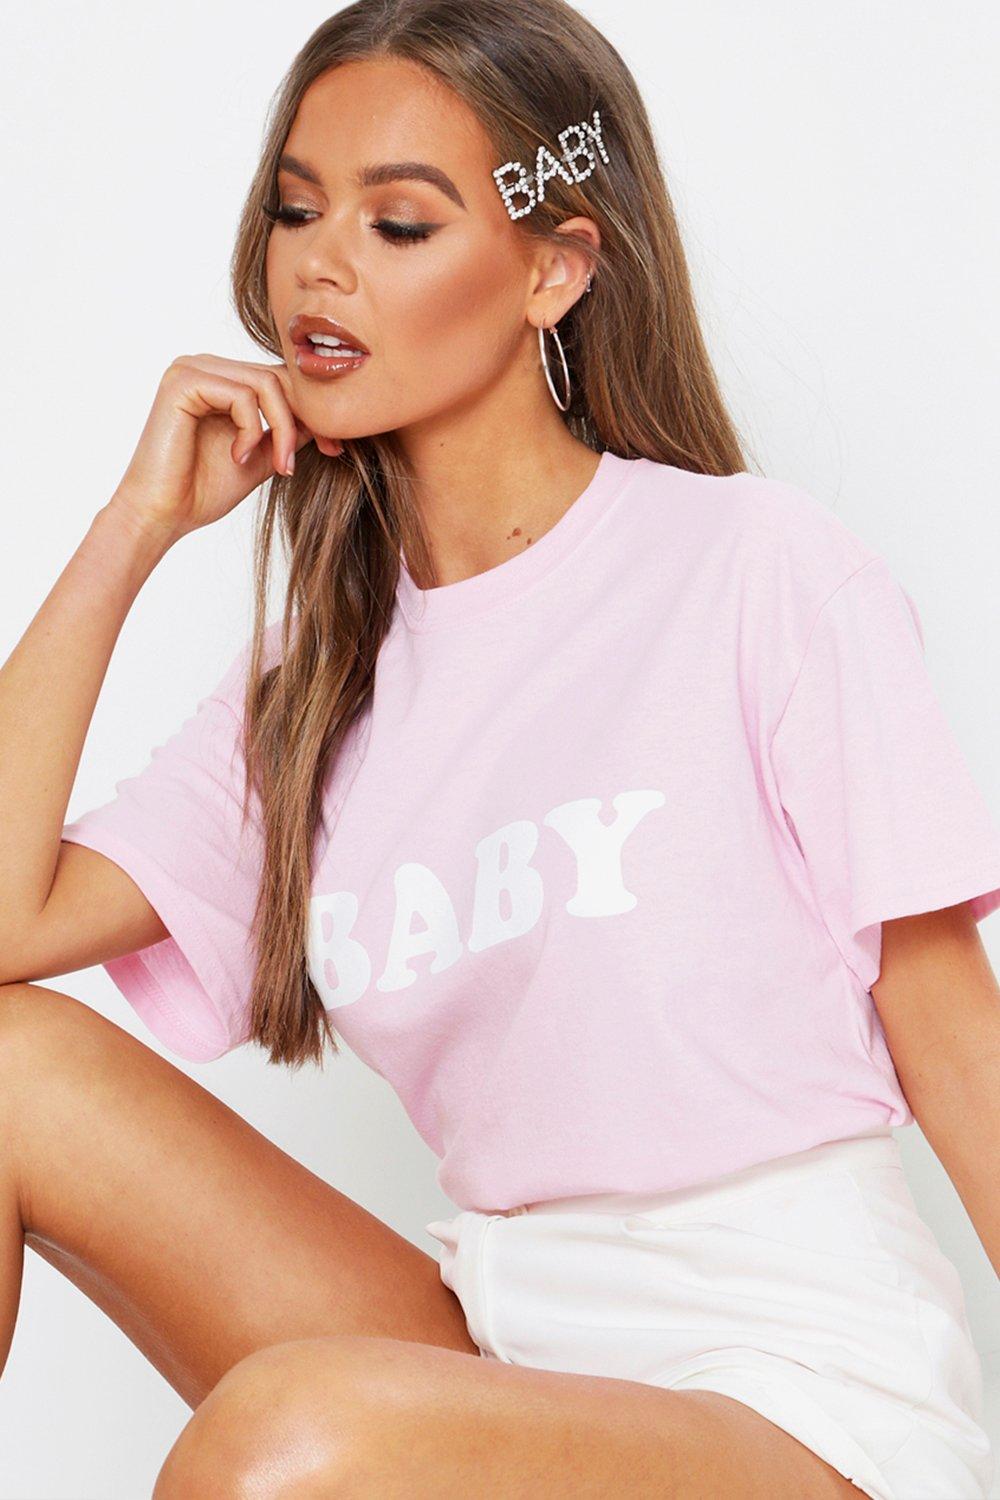 etisk Indvending ris Baby Slogan T-Shirt | boohoo